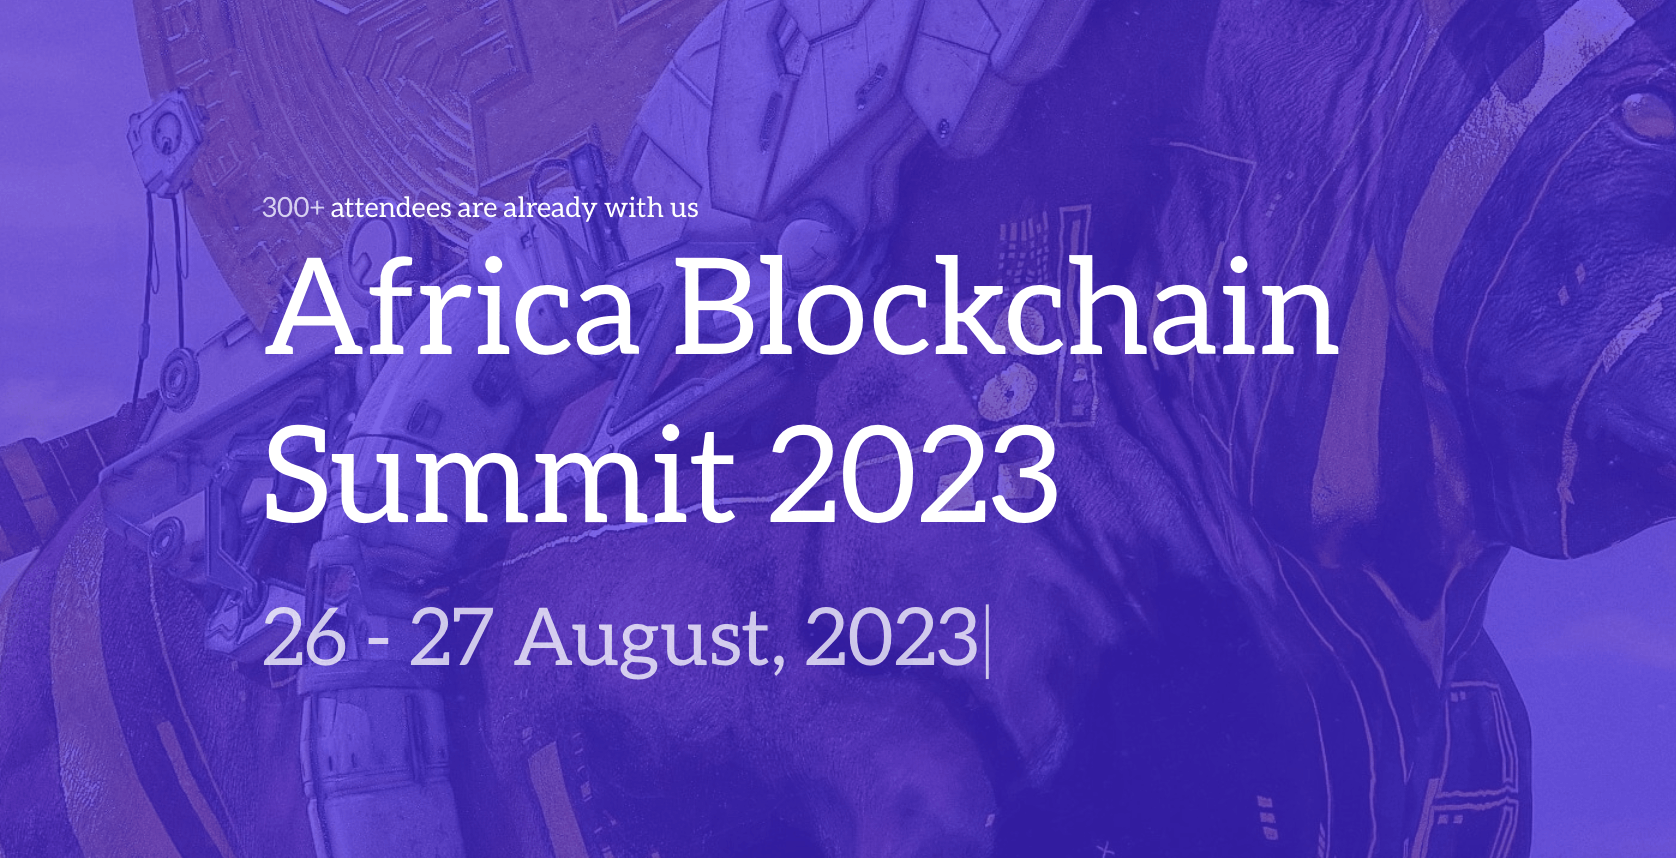 Africa Blockchain Summit 2023